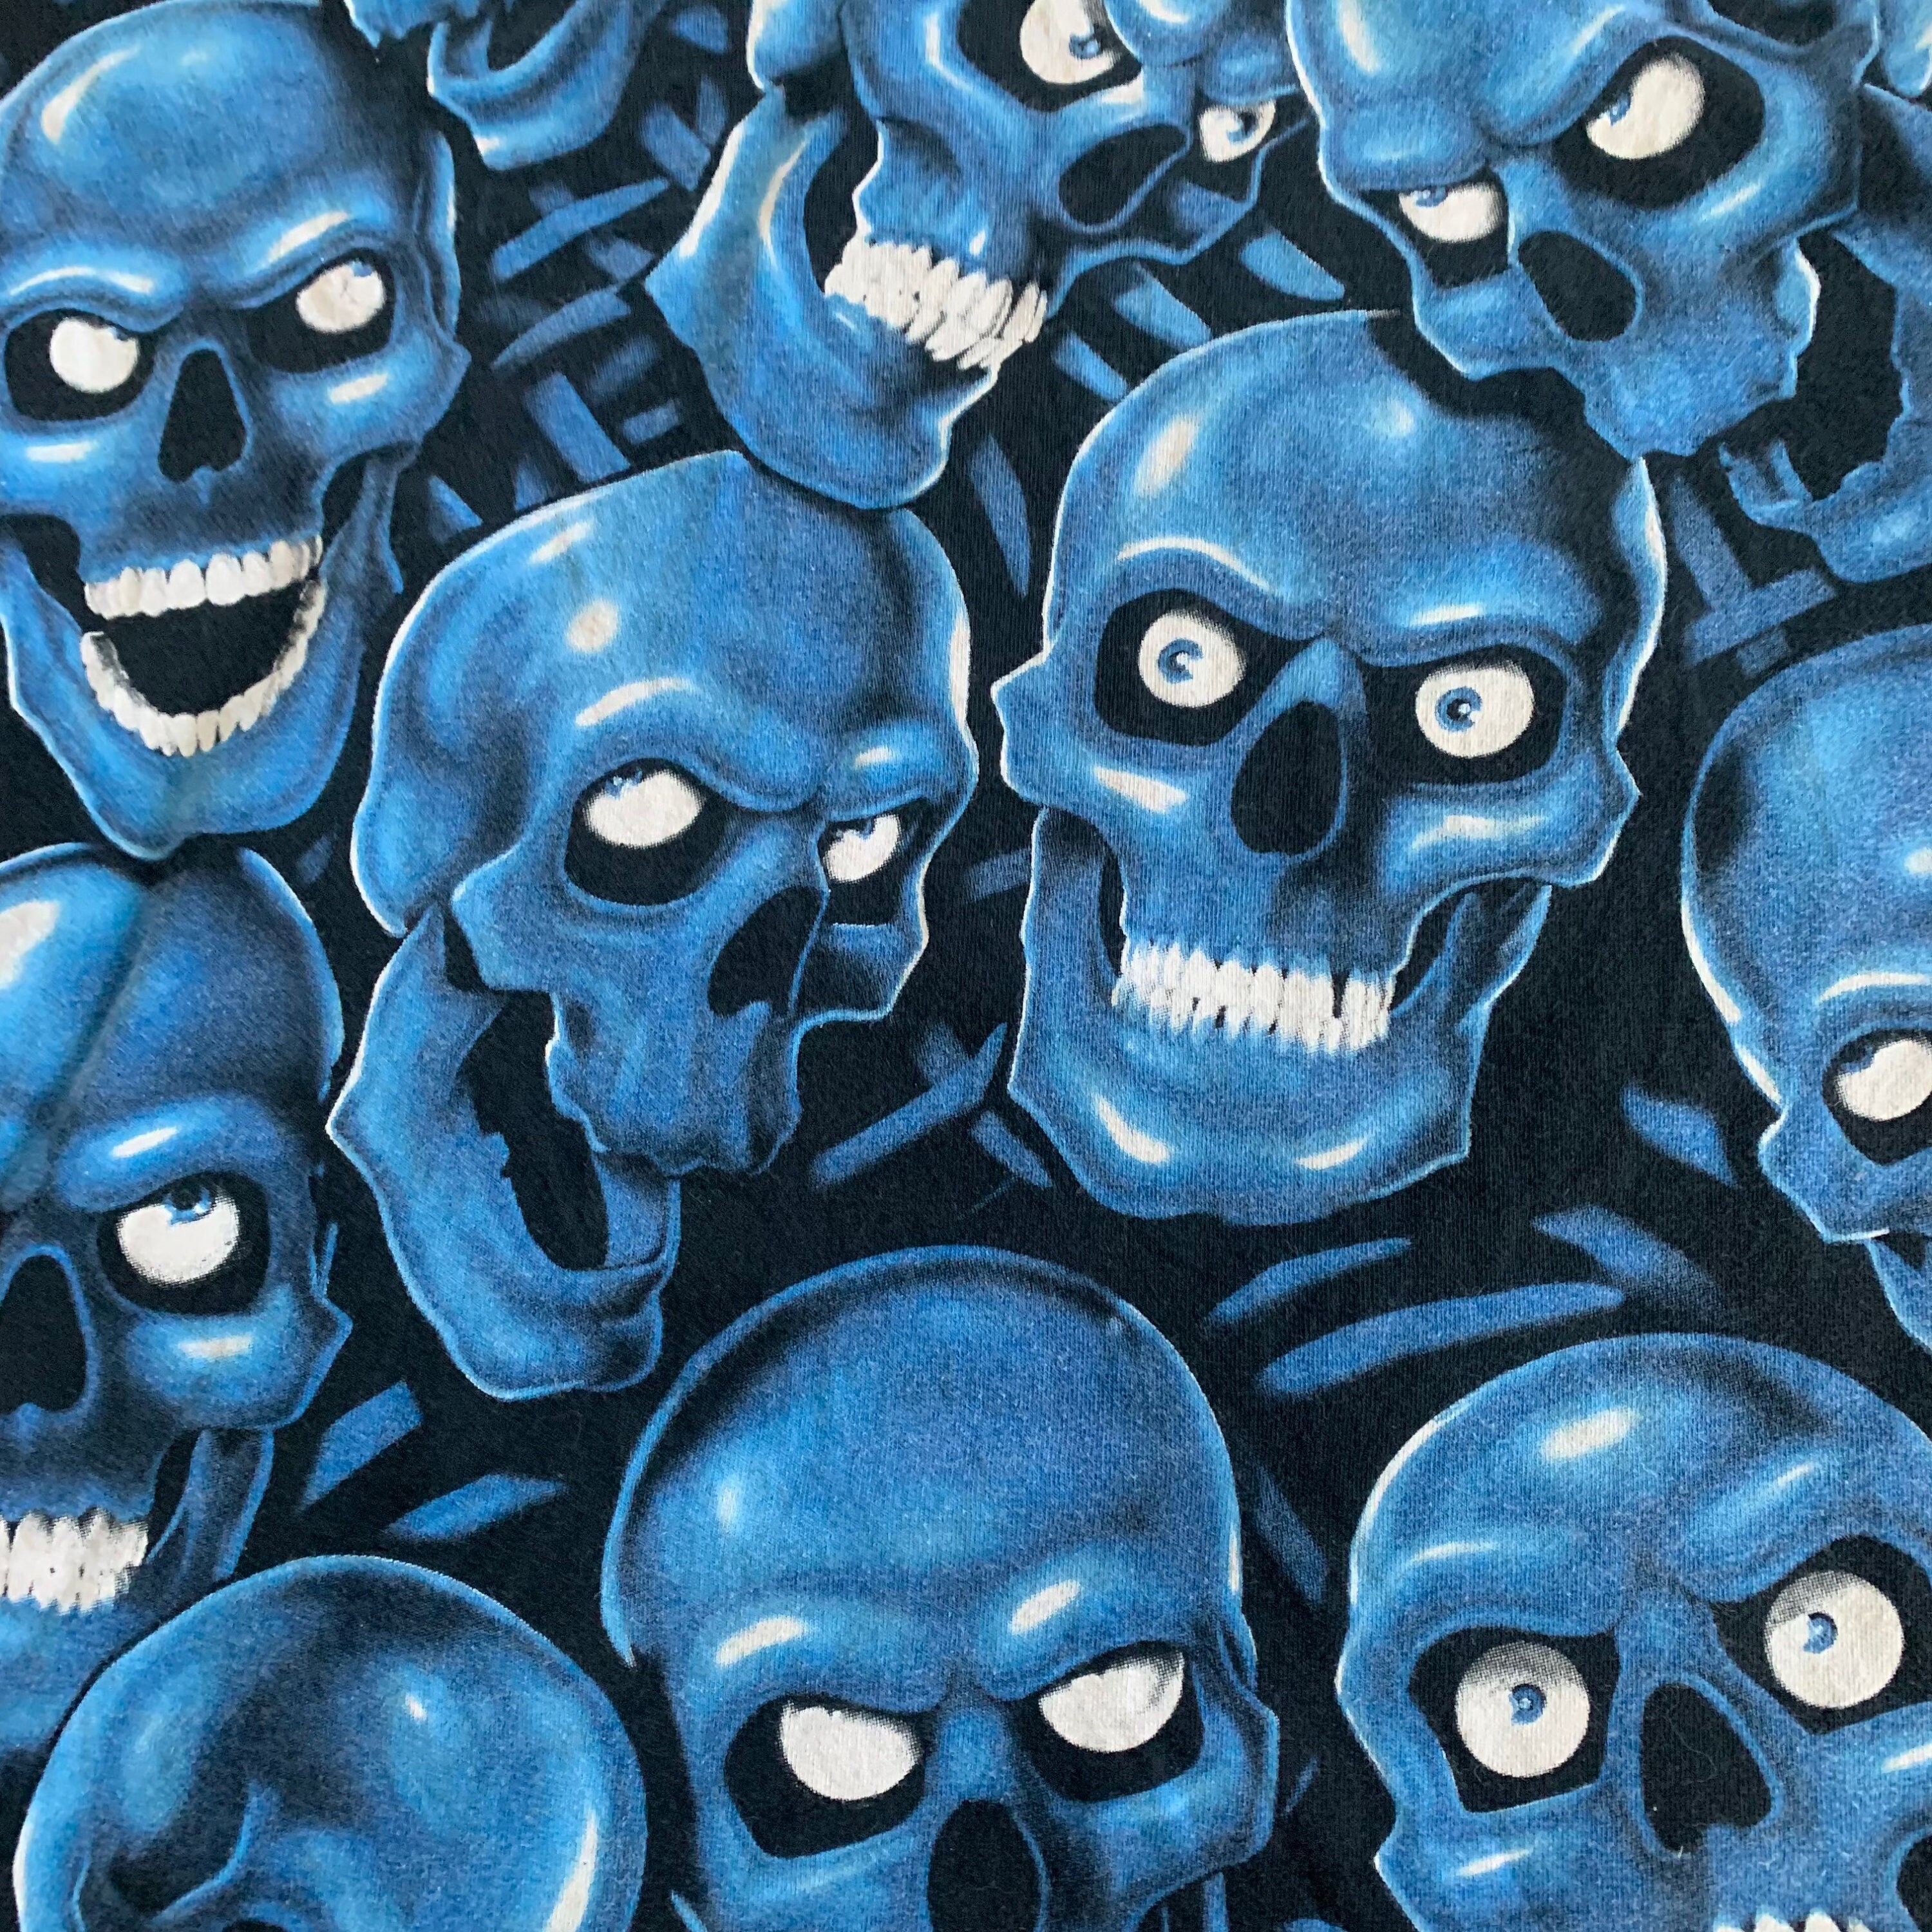 Skull & Bones Roman Tile Burnout Brief Neon Blue SB-05 at